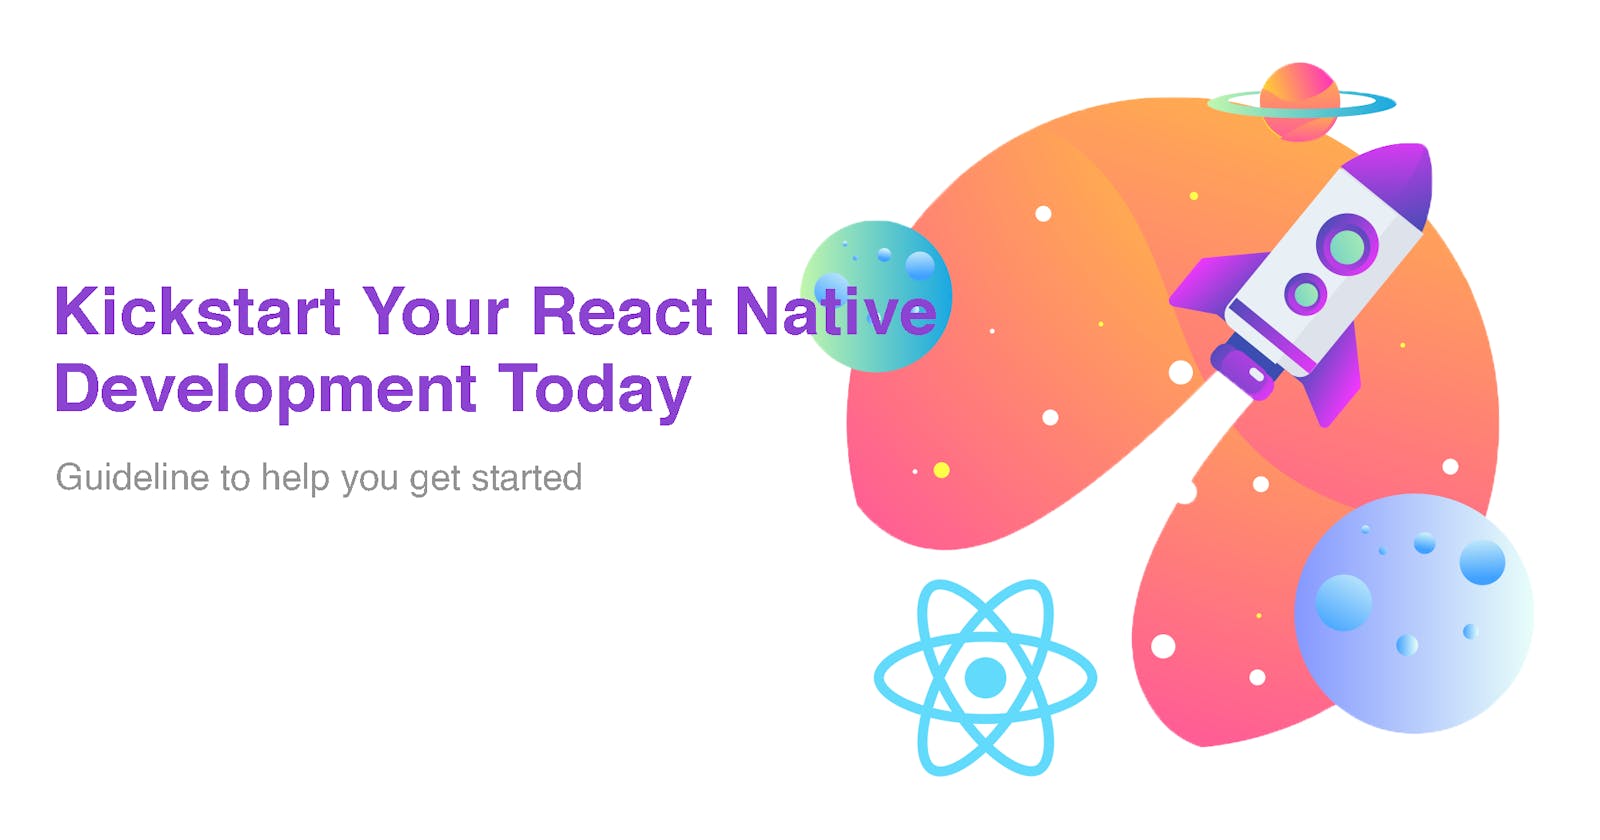 Kickstart Your React Native Development Today